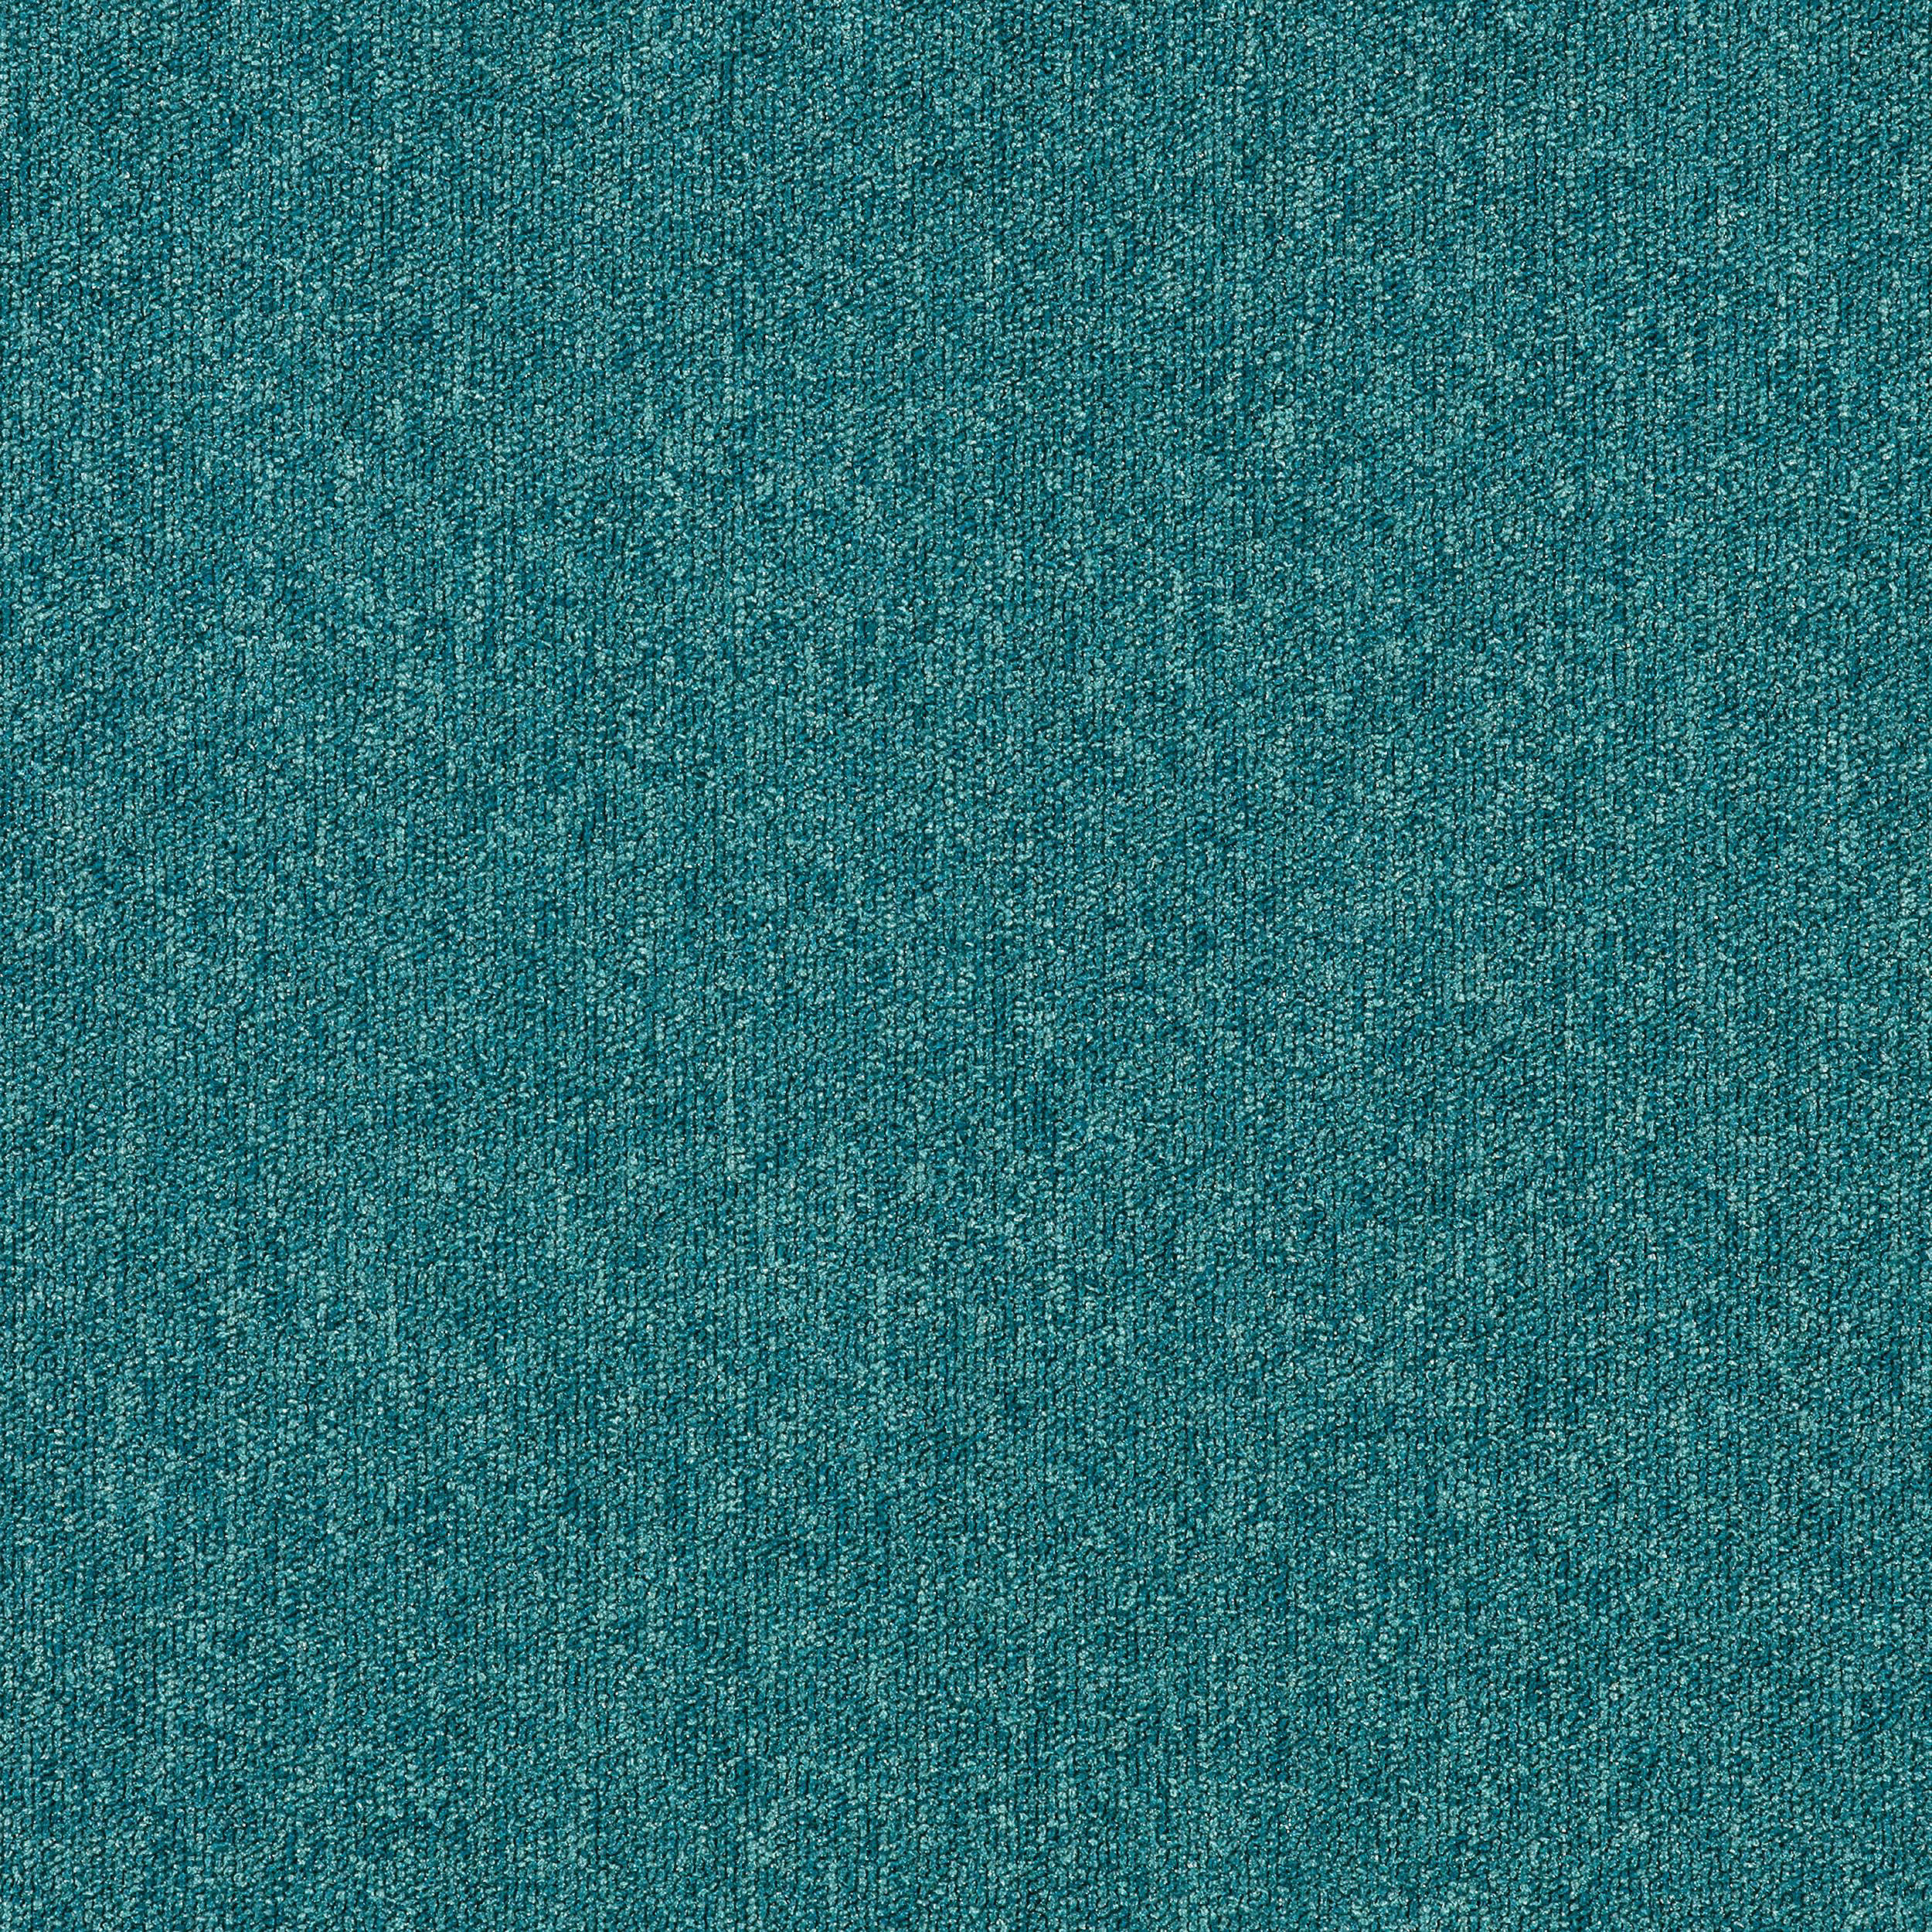 Heuga 580 Carpet Tile In Reef número de imagen 7